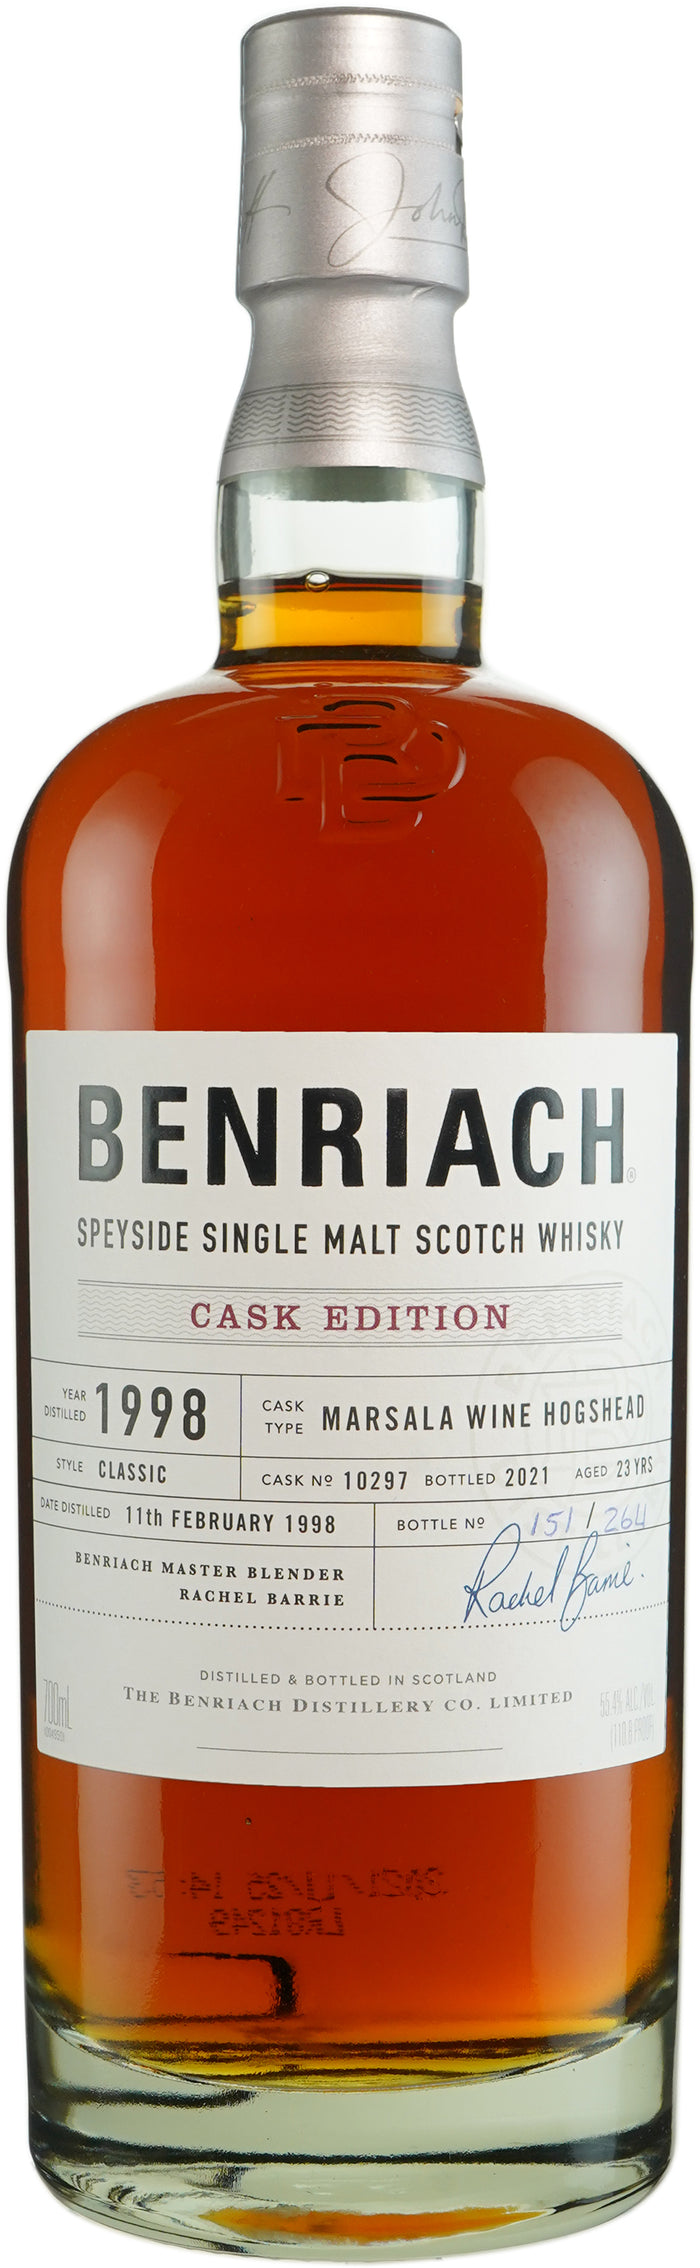 BenRiach Cask Edition 23 Year Old Marsala Hogshead # 10297 1998 Scotch Whisky | 700ML